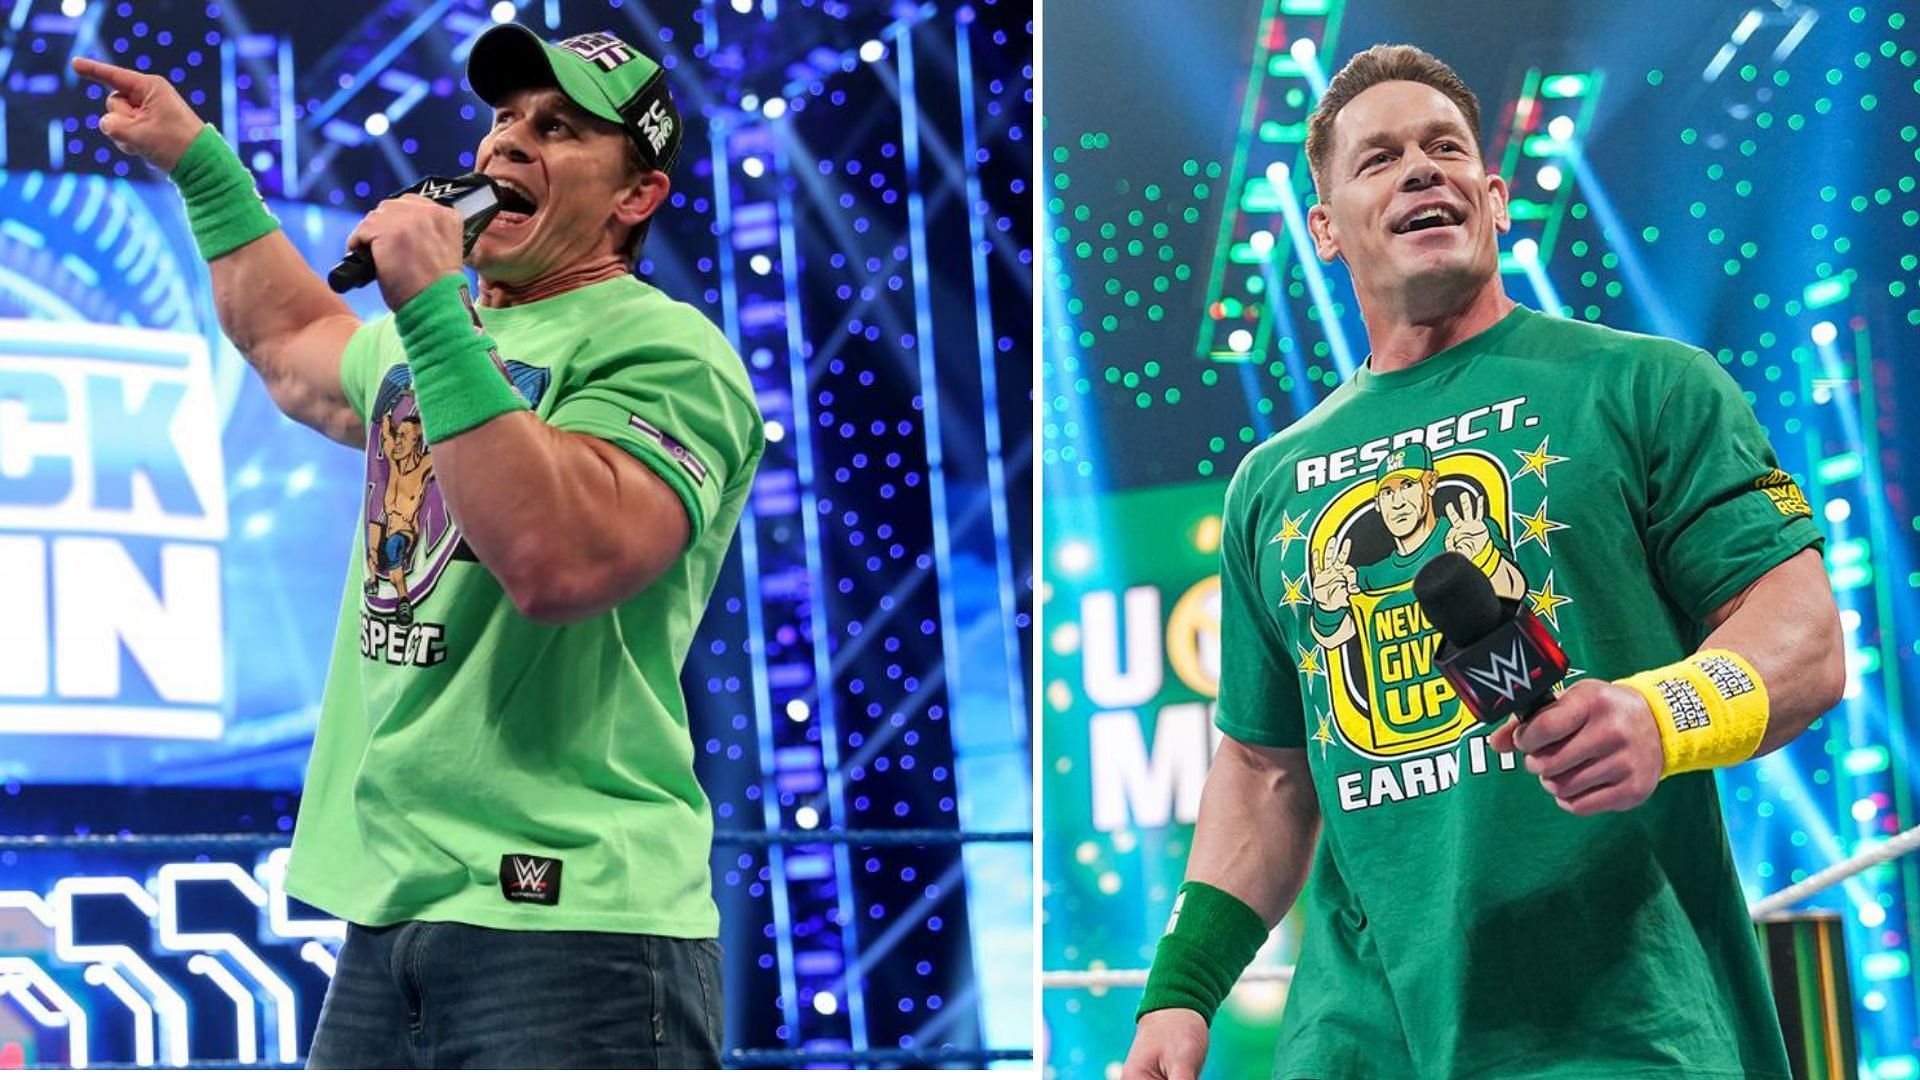 John Cena is set to return to WWE soon